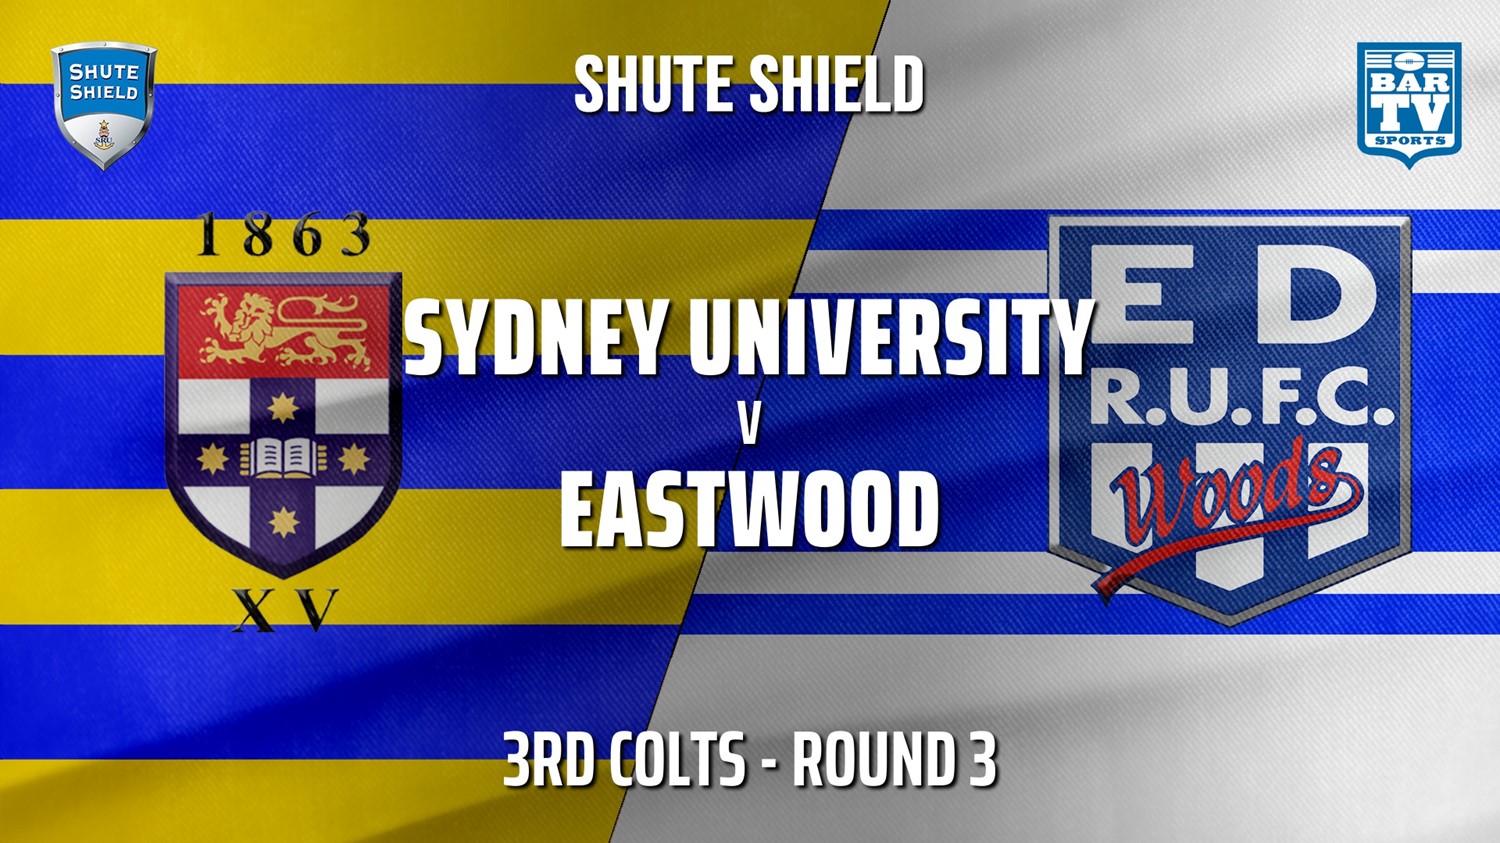 210421-Shute Shield Round 3 - 3rd Colts - Sydney University v Eastwood Minigame Slate Image